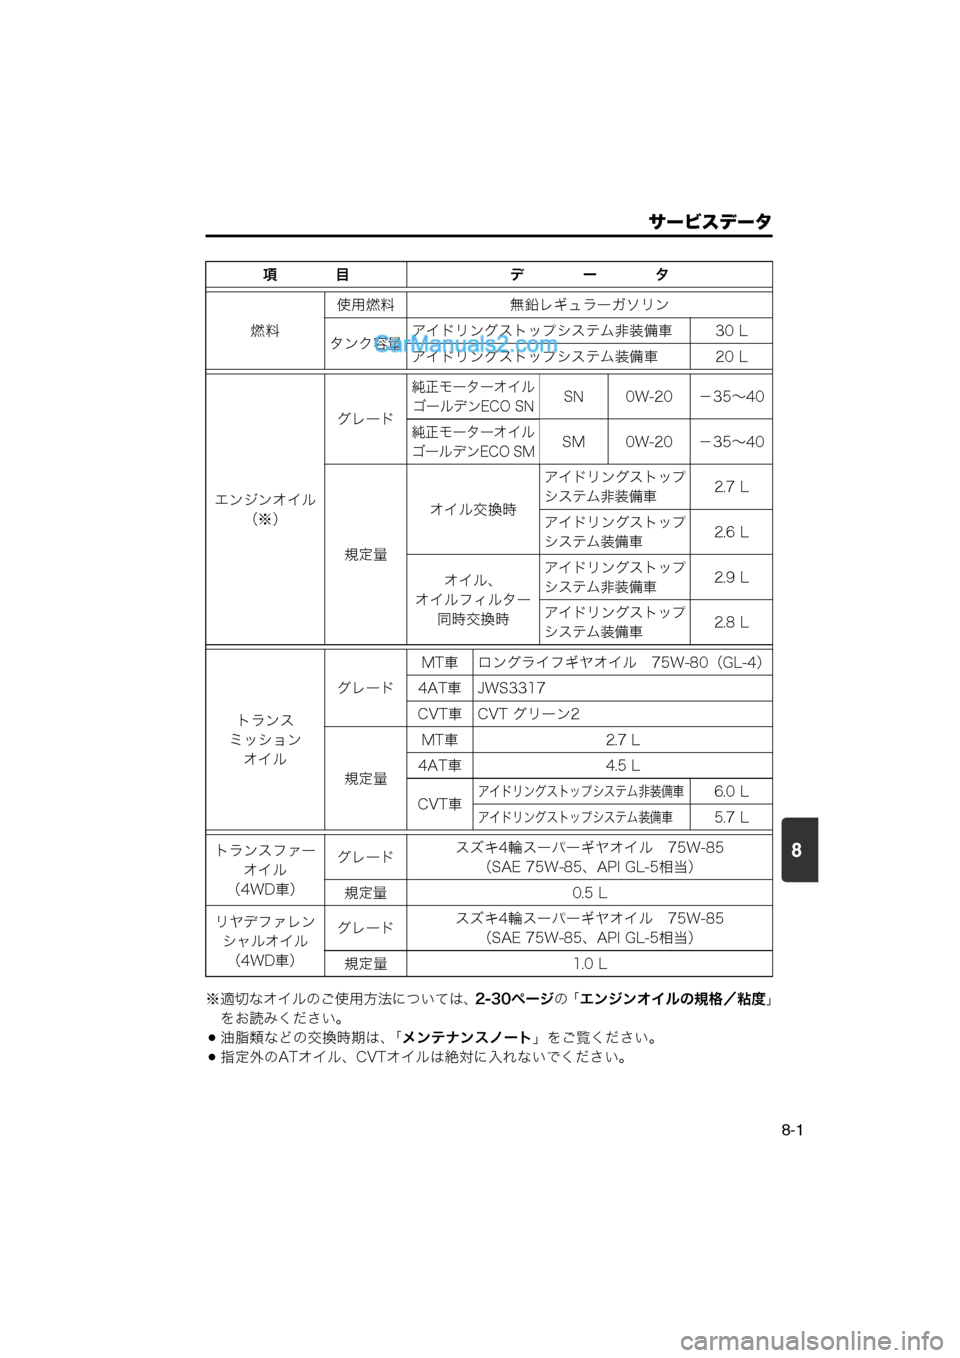 MAZDA MODEL CARROL 2013  取扱説明書 (キャロル) (in Japanese) 8
サービスデータ
8-1
※適切なオイルのご使用方法については、2-30ページの「エンジンオイルの規格／粘度」
をお読みください。
油脂類などの交�